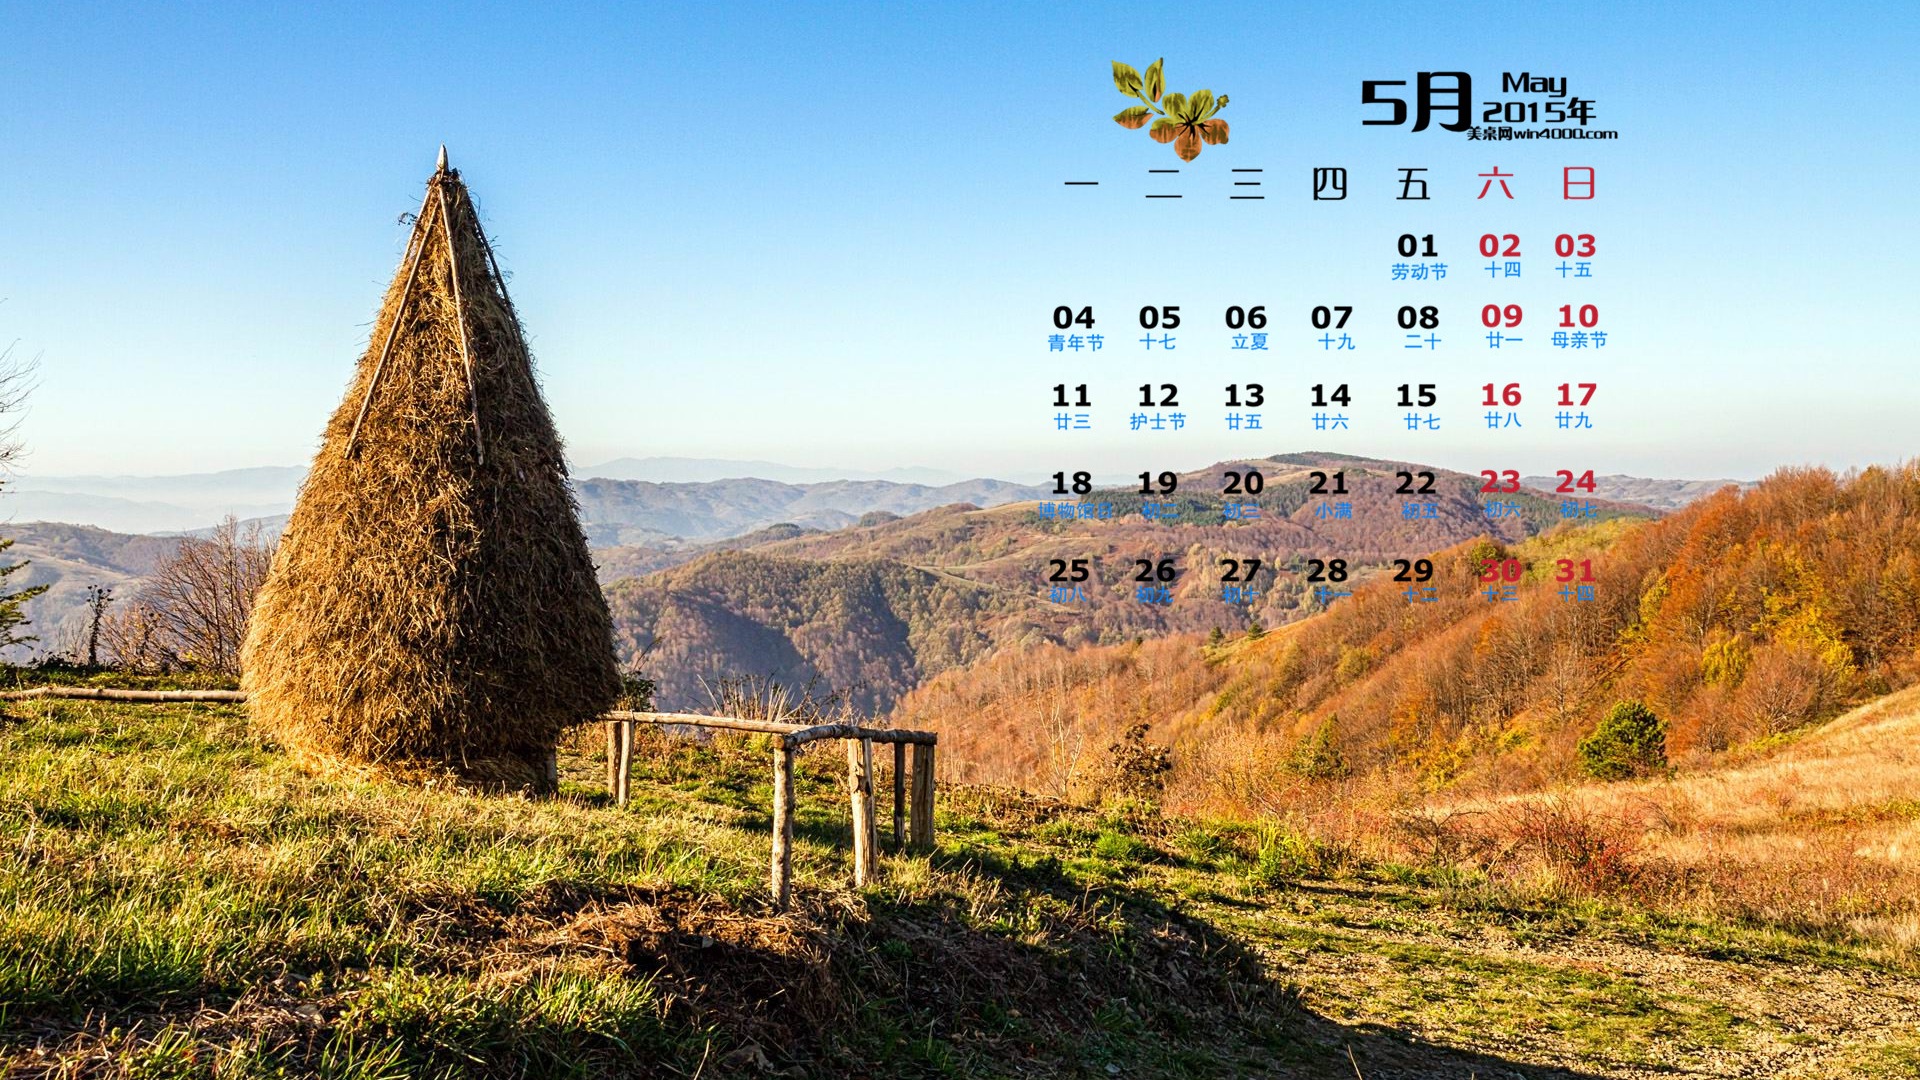 Mai 2015 calendar fond d'écran (1) #11 - 1920x1080